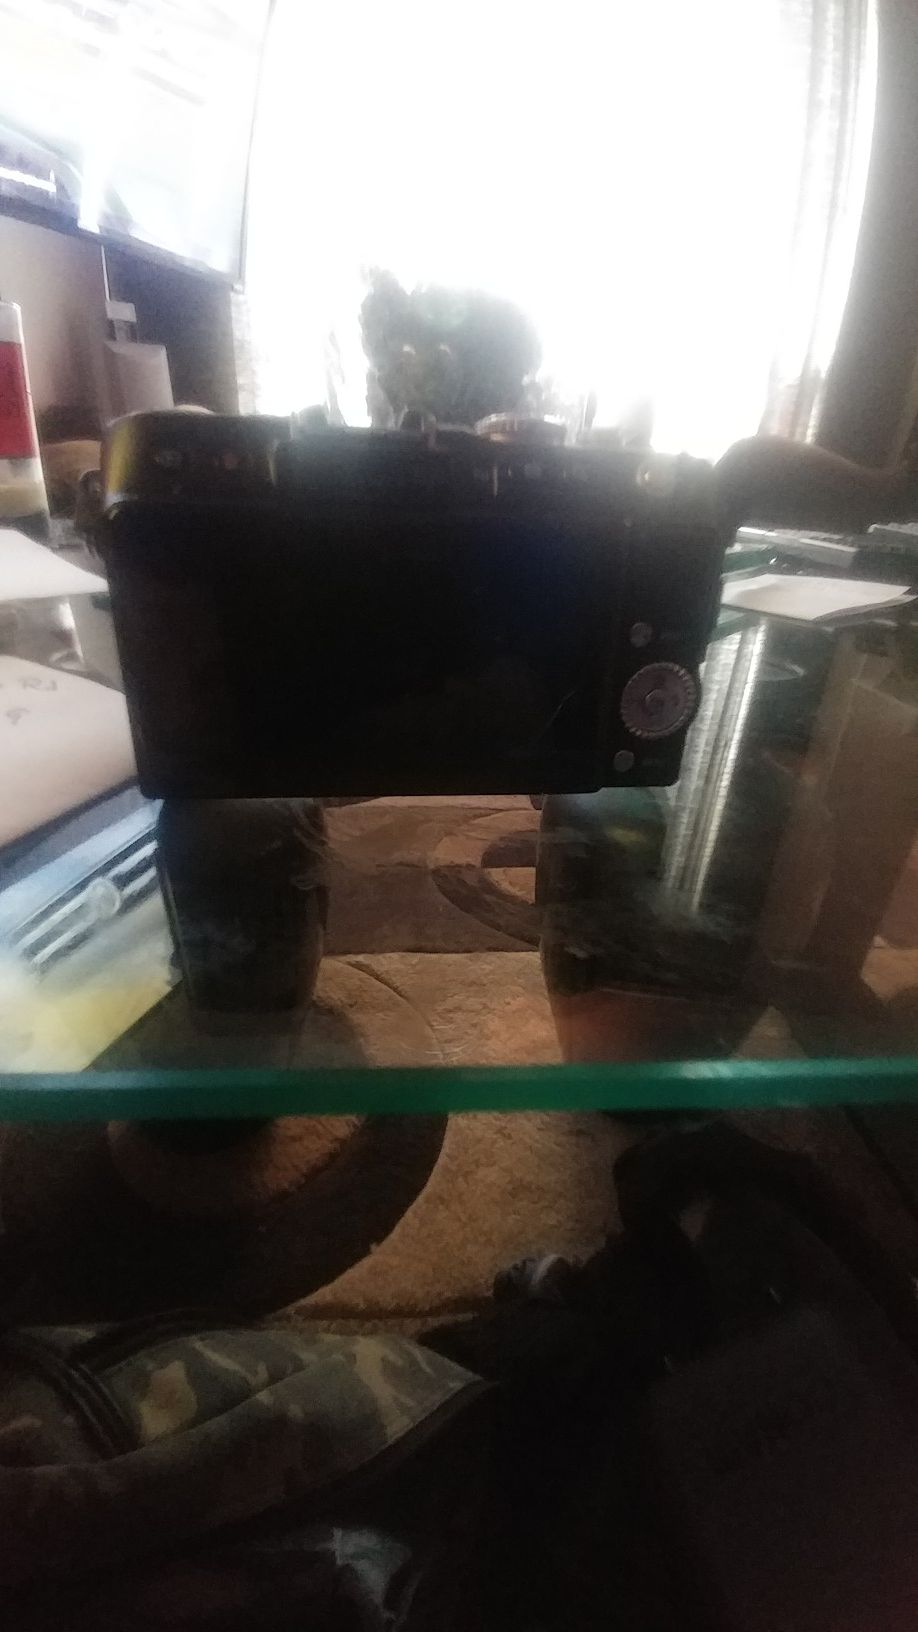 Olympus E-PL3 Mirrorless Micro camera